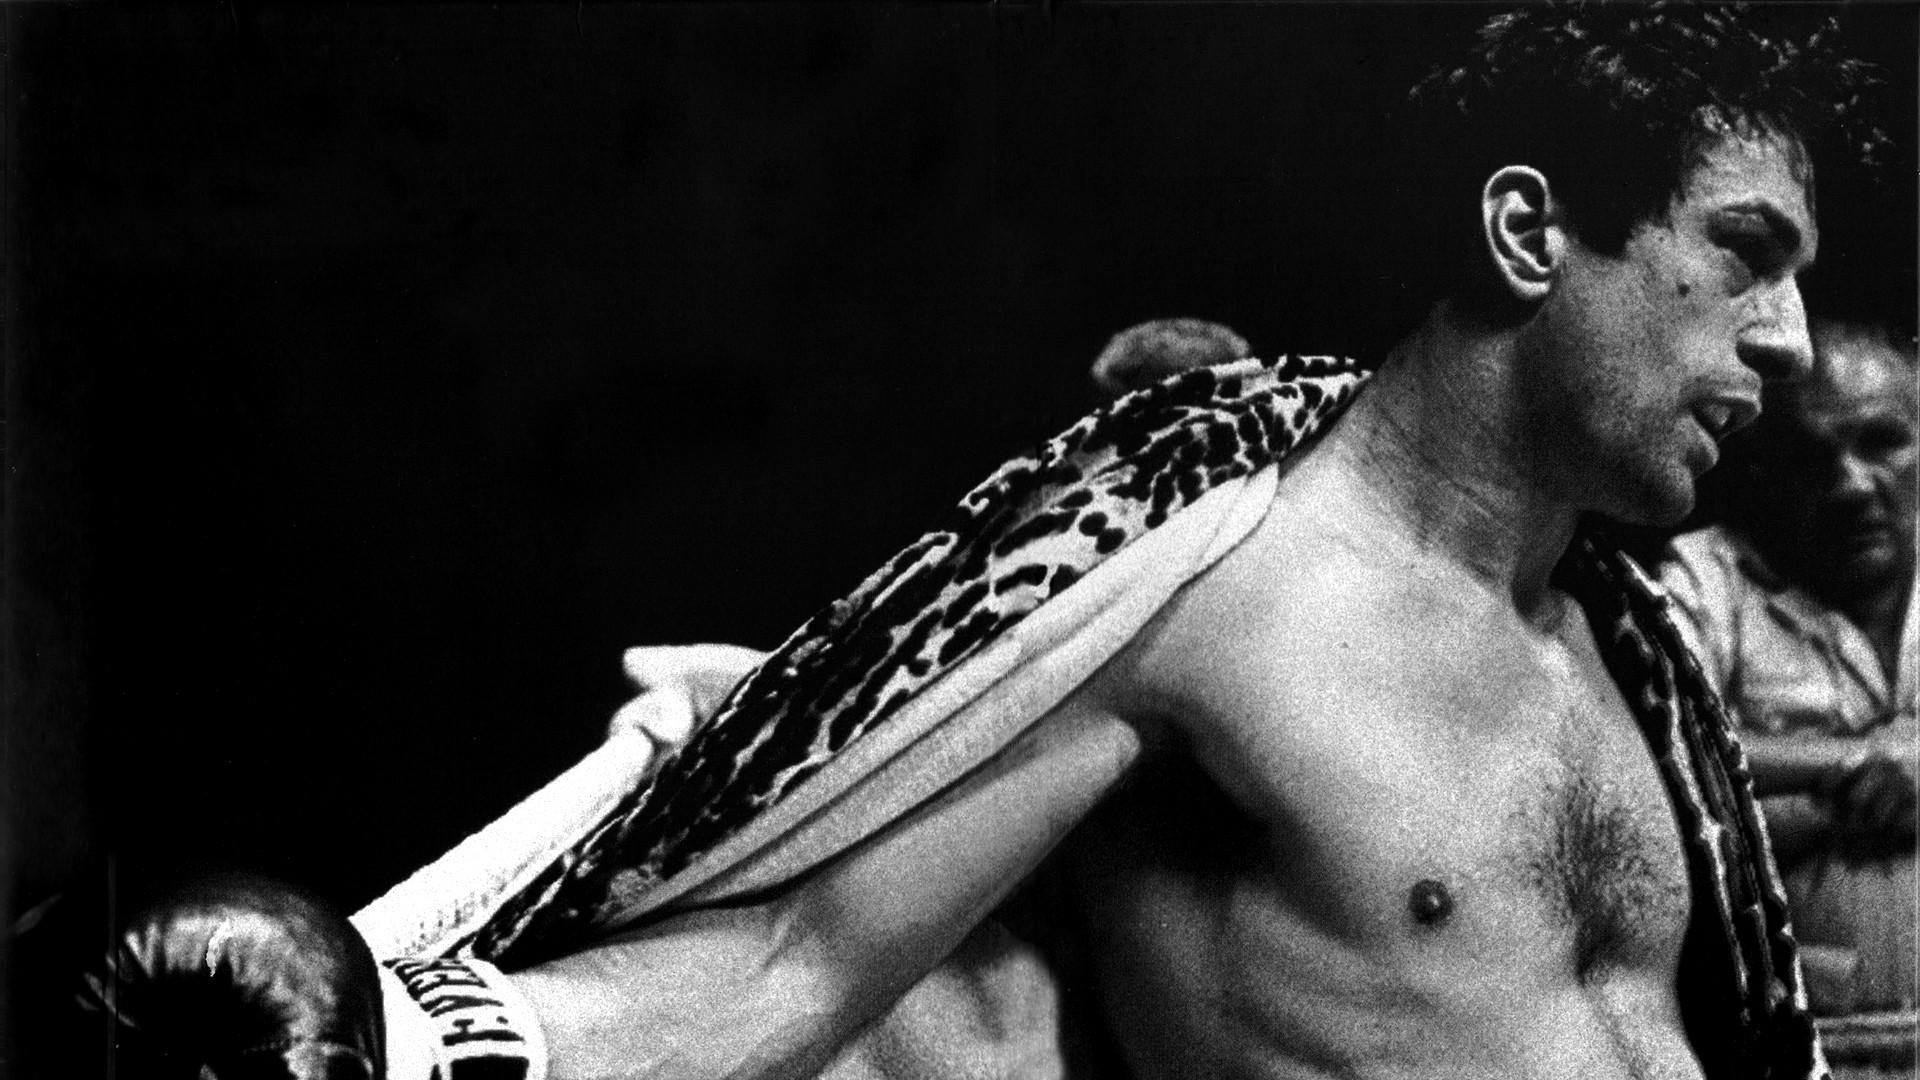 Raging Bull: The film stars Robert De Niro as Jake LaMotta, an Italian-American middleweight boxer. 1920x1080 Full HD Background.